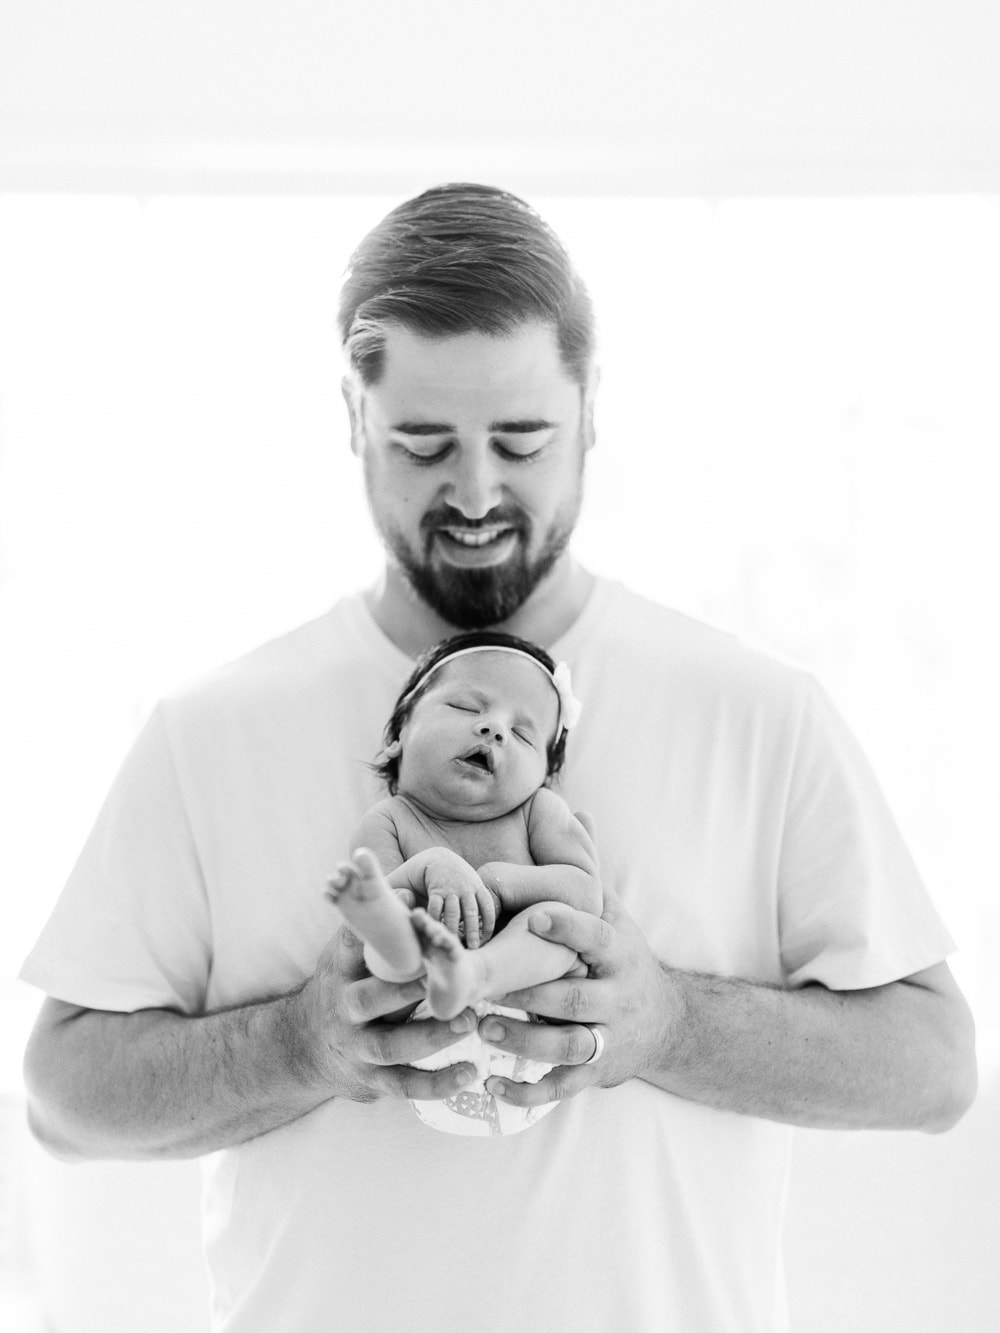 Newborn with dad, Cleveland Newborn Photography, In-home newborn photography photo inspiration by Juliana Kaderbek Photography